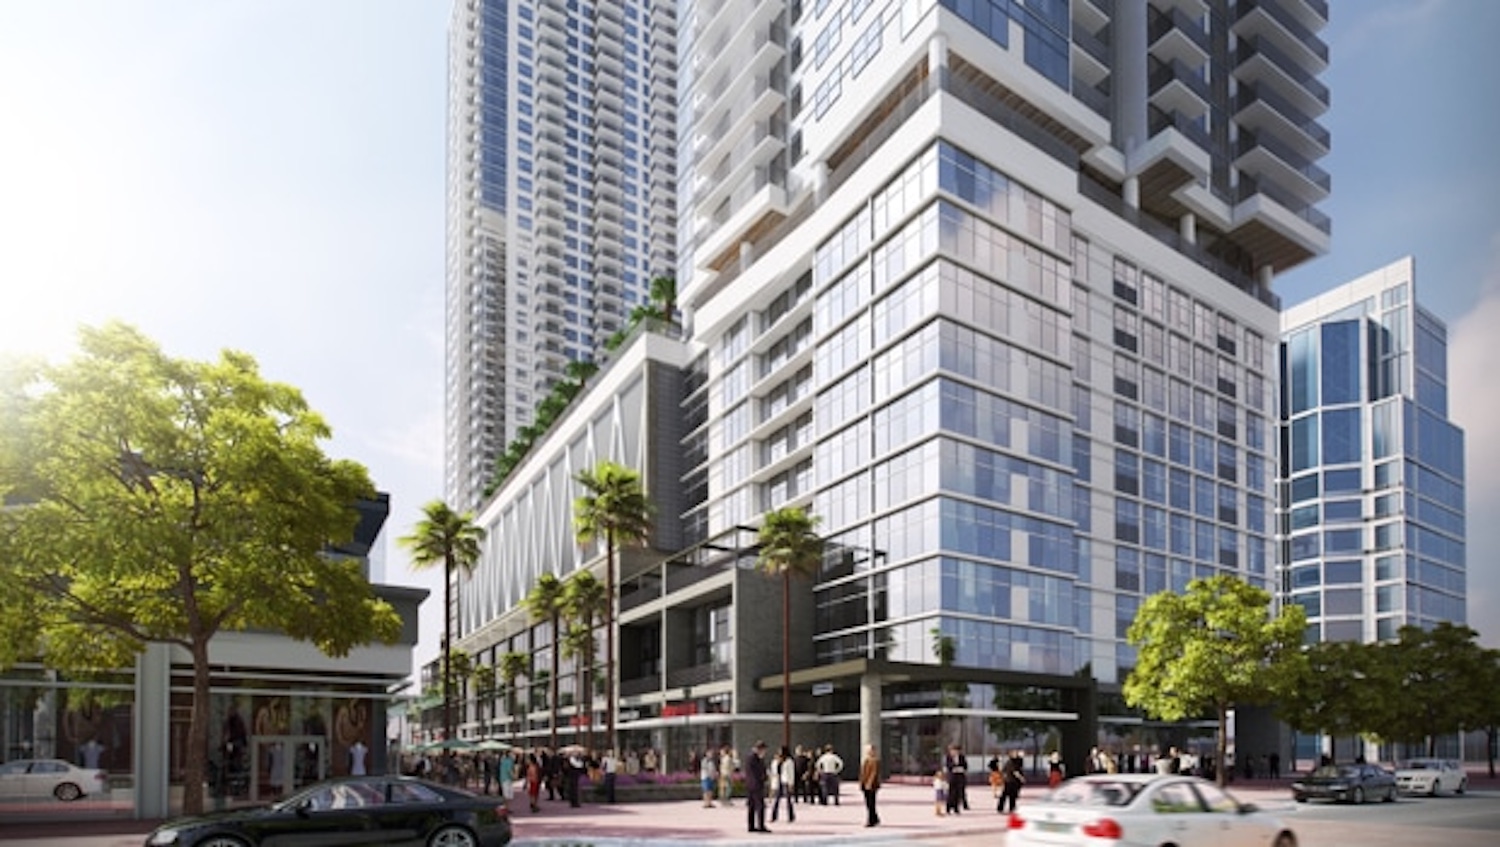 Miami Worldcenter Block G. Courtesy of CFE & Associates Architects.